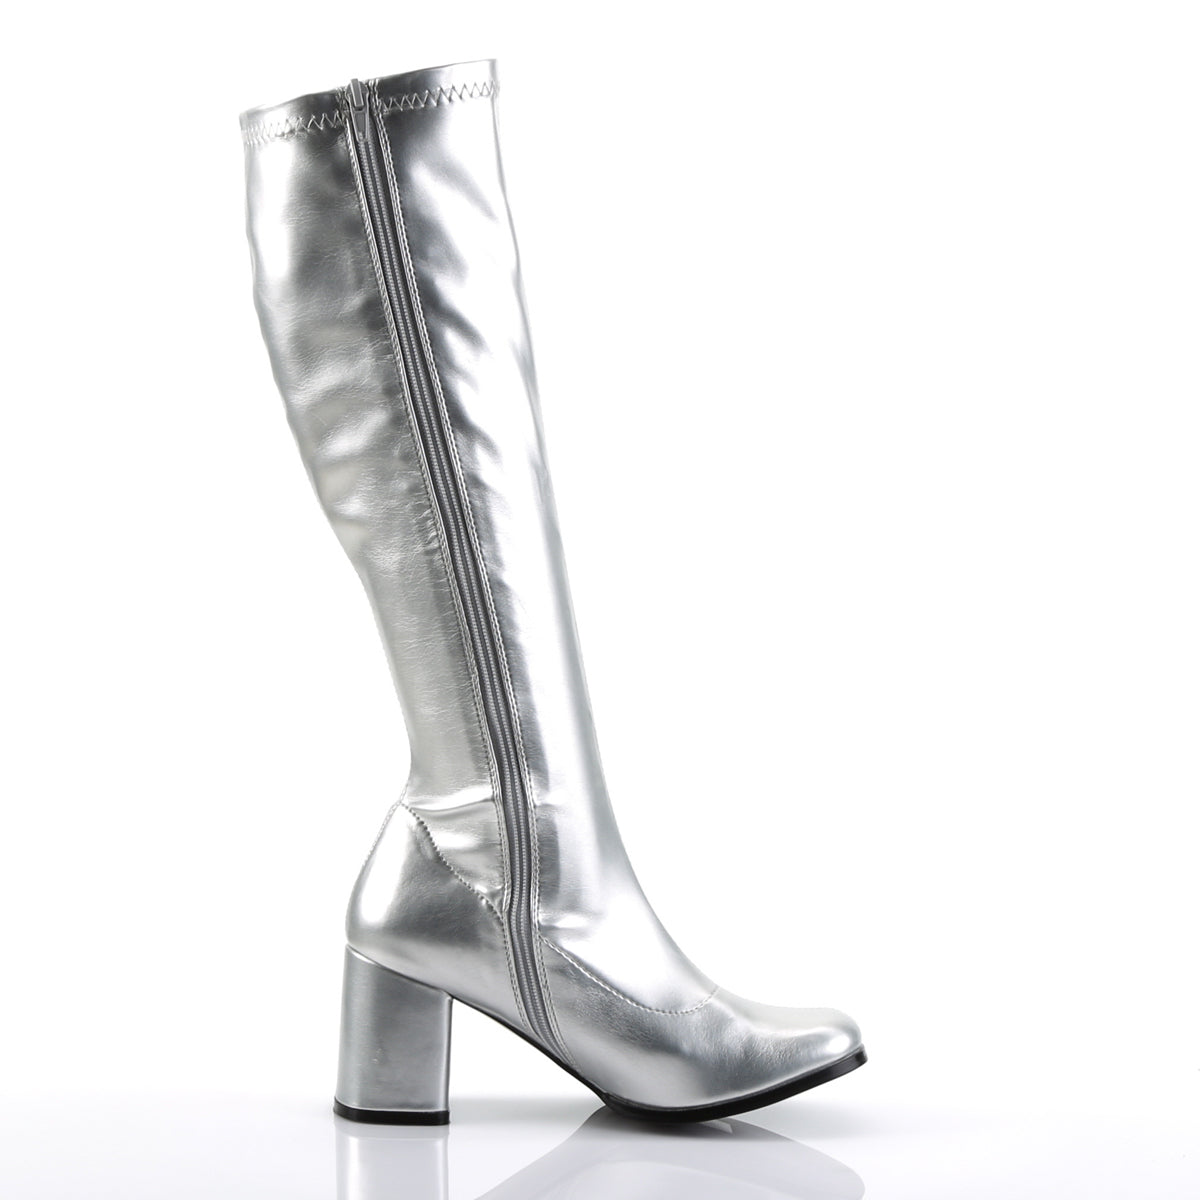 GOGO-300 3 Inch Heel Silver Women's Boots Funtasma Costume Shoes Fancy Dress